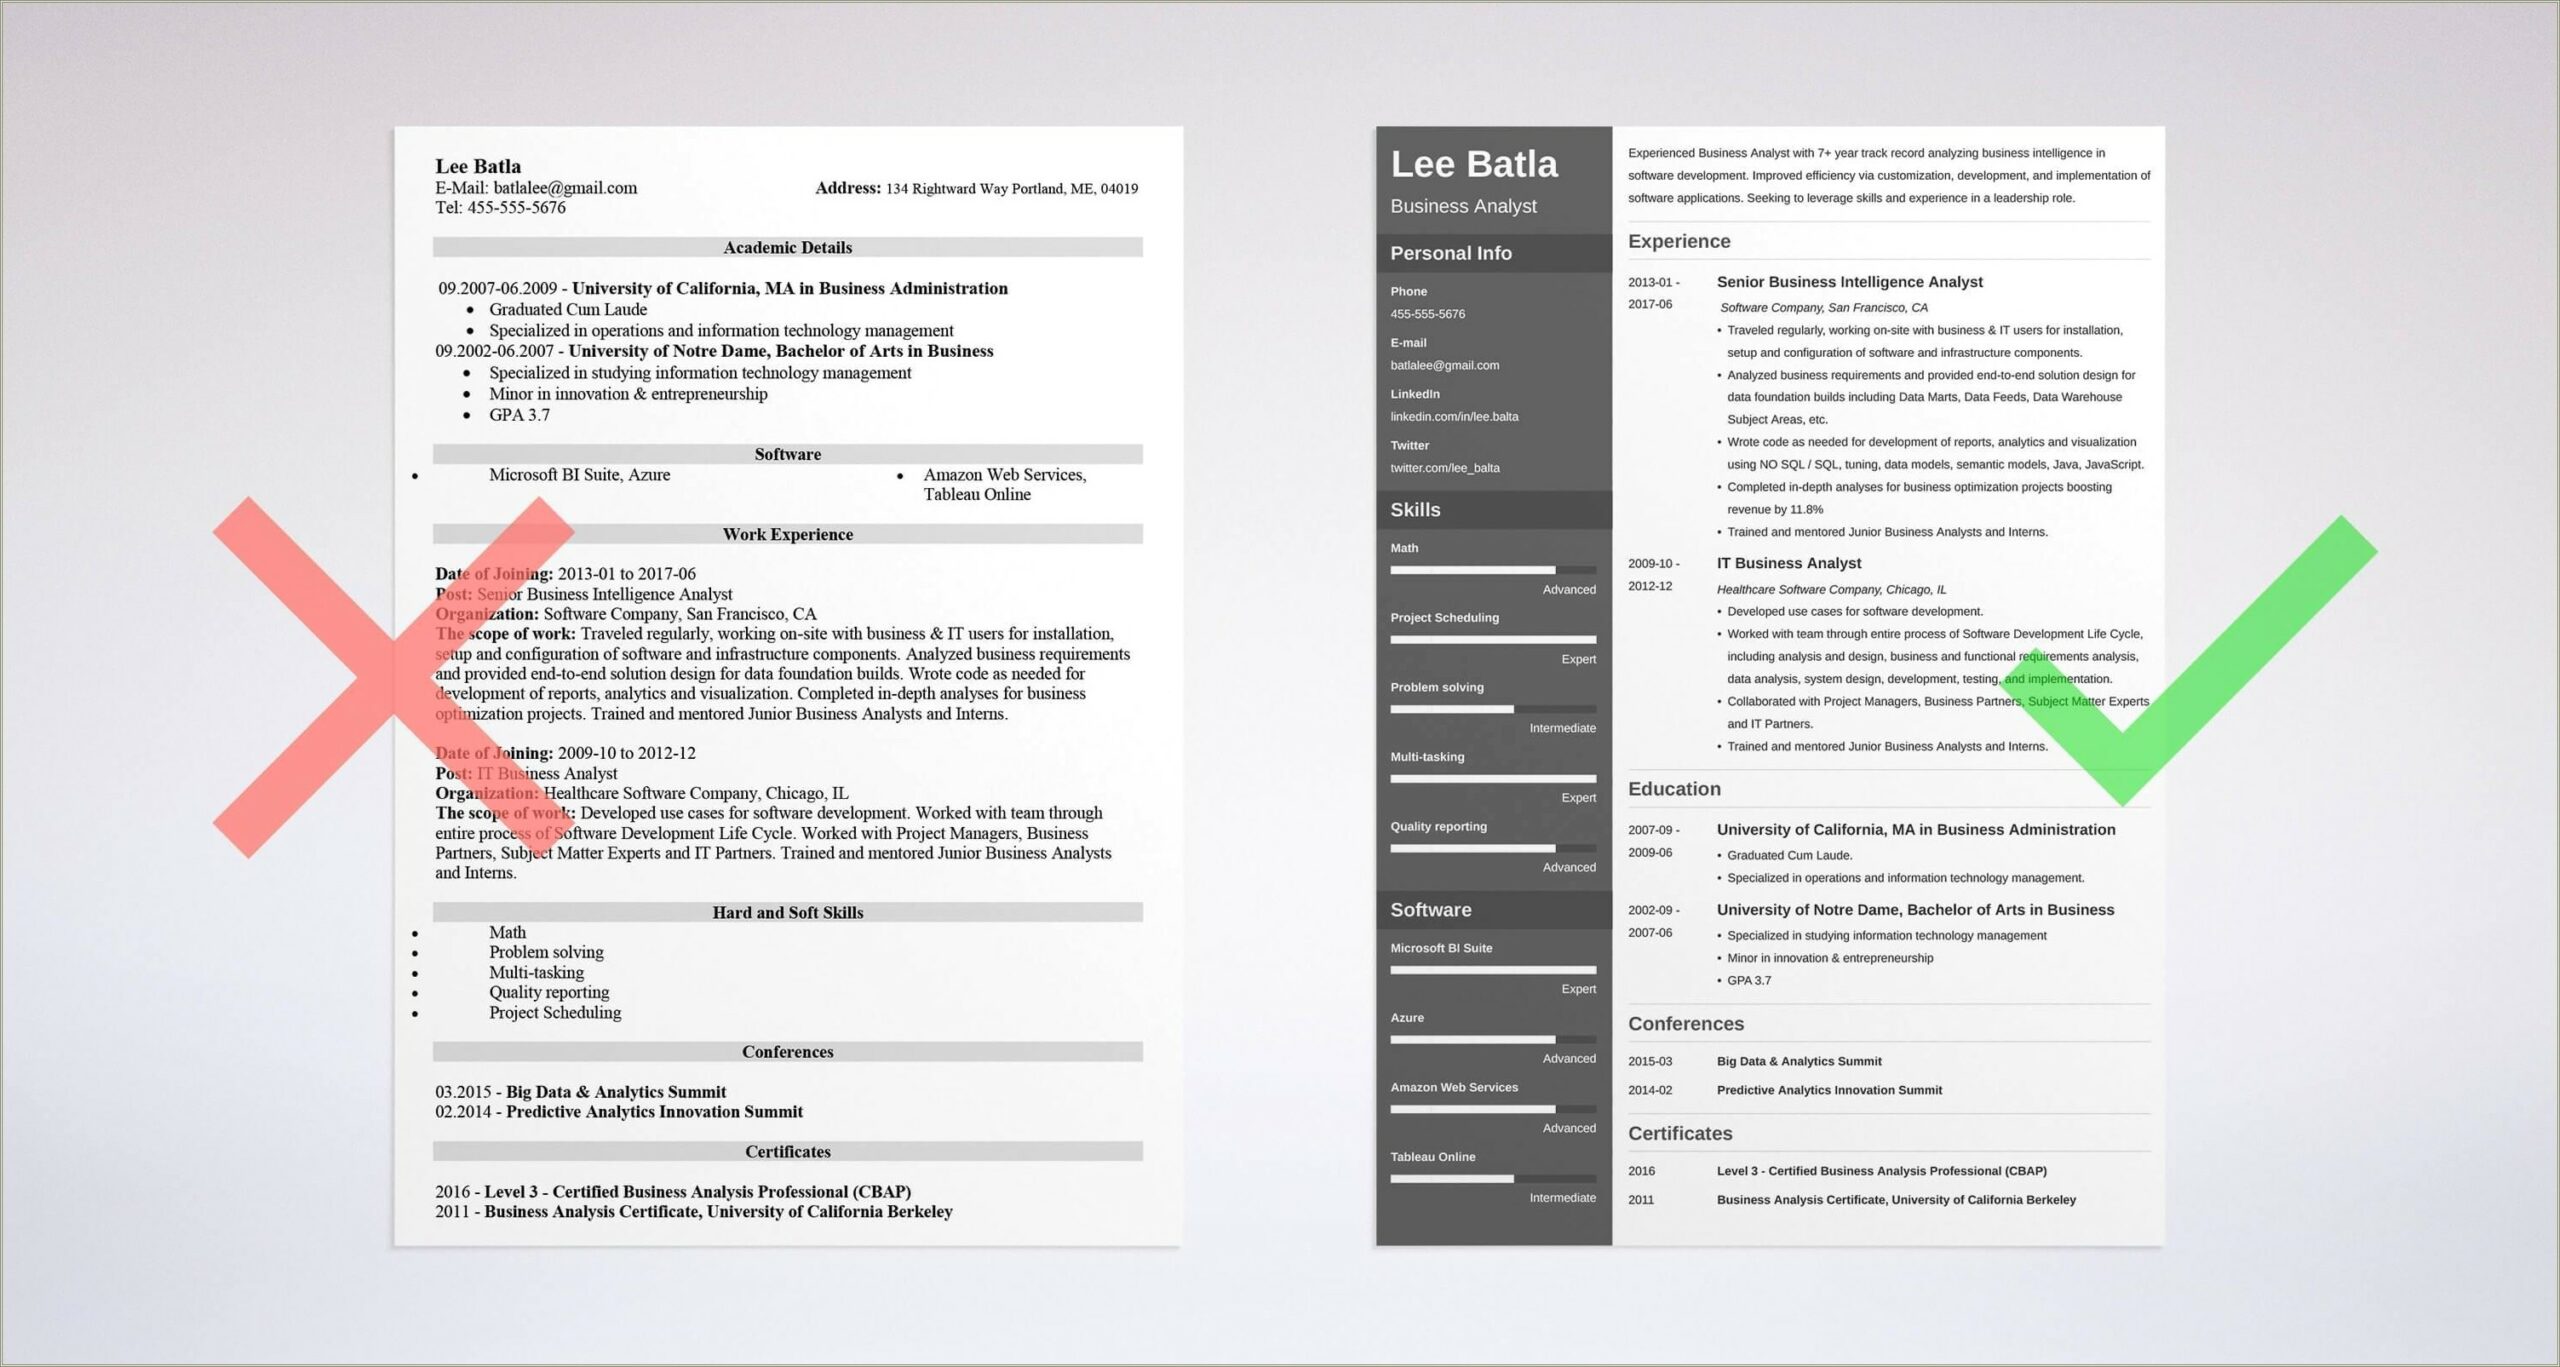 Business Analyst Data Warehouse Sample Resume